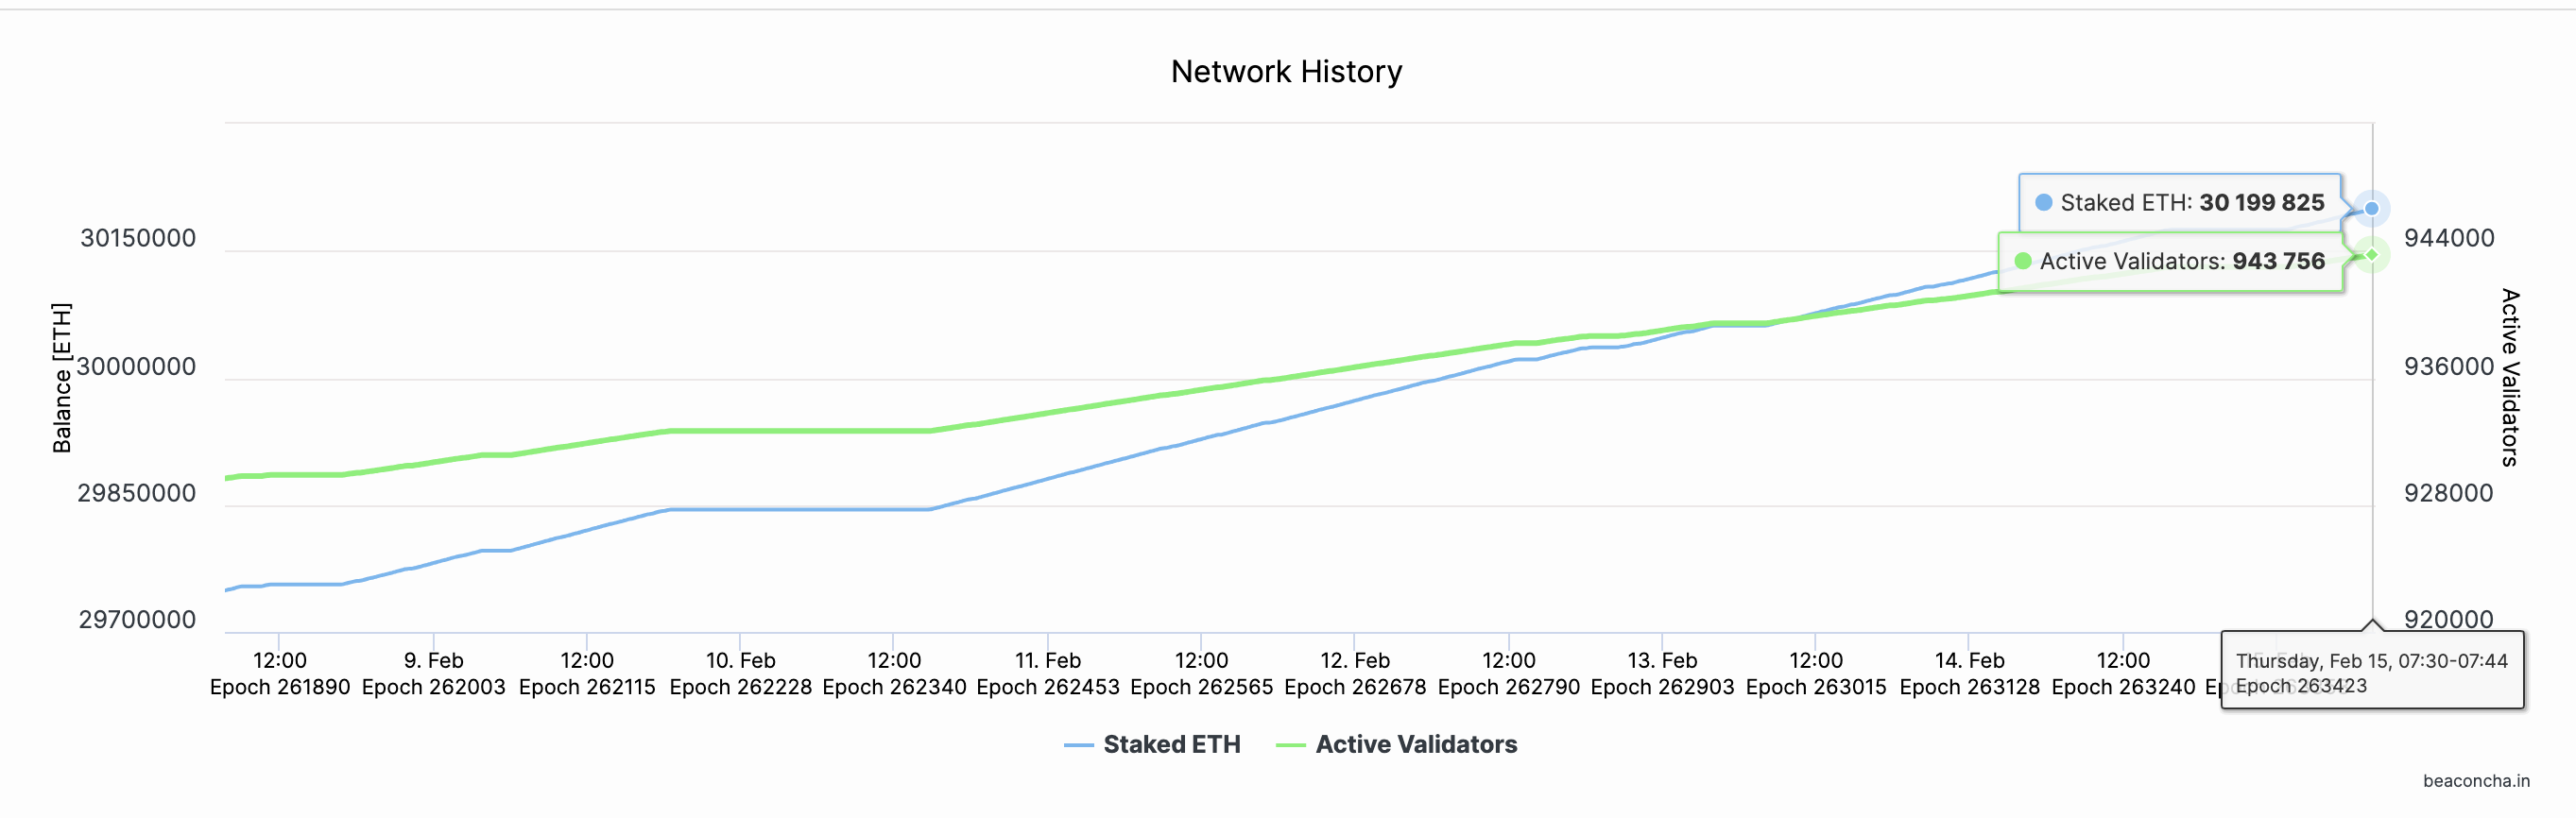 Ethereum (ETH) Staking Balances vs. Active Validators | Source: Beaconcha.in